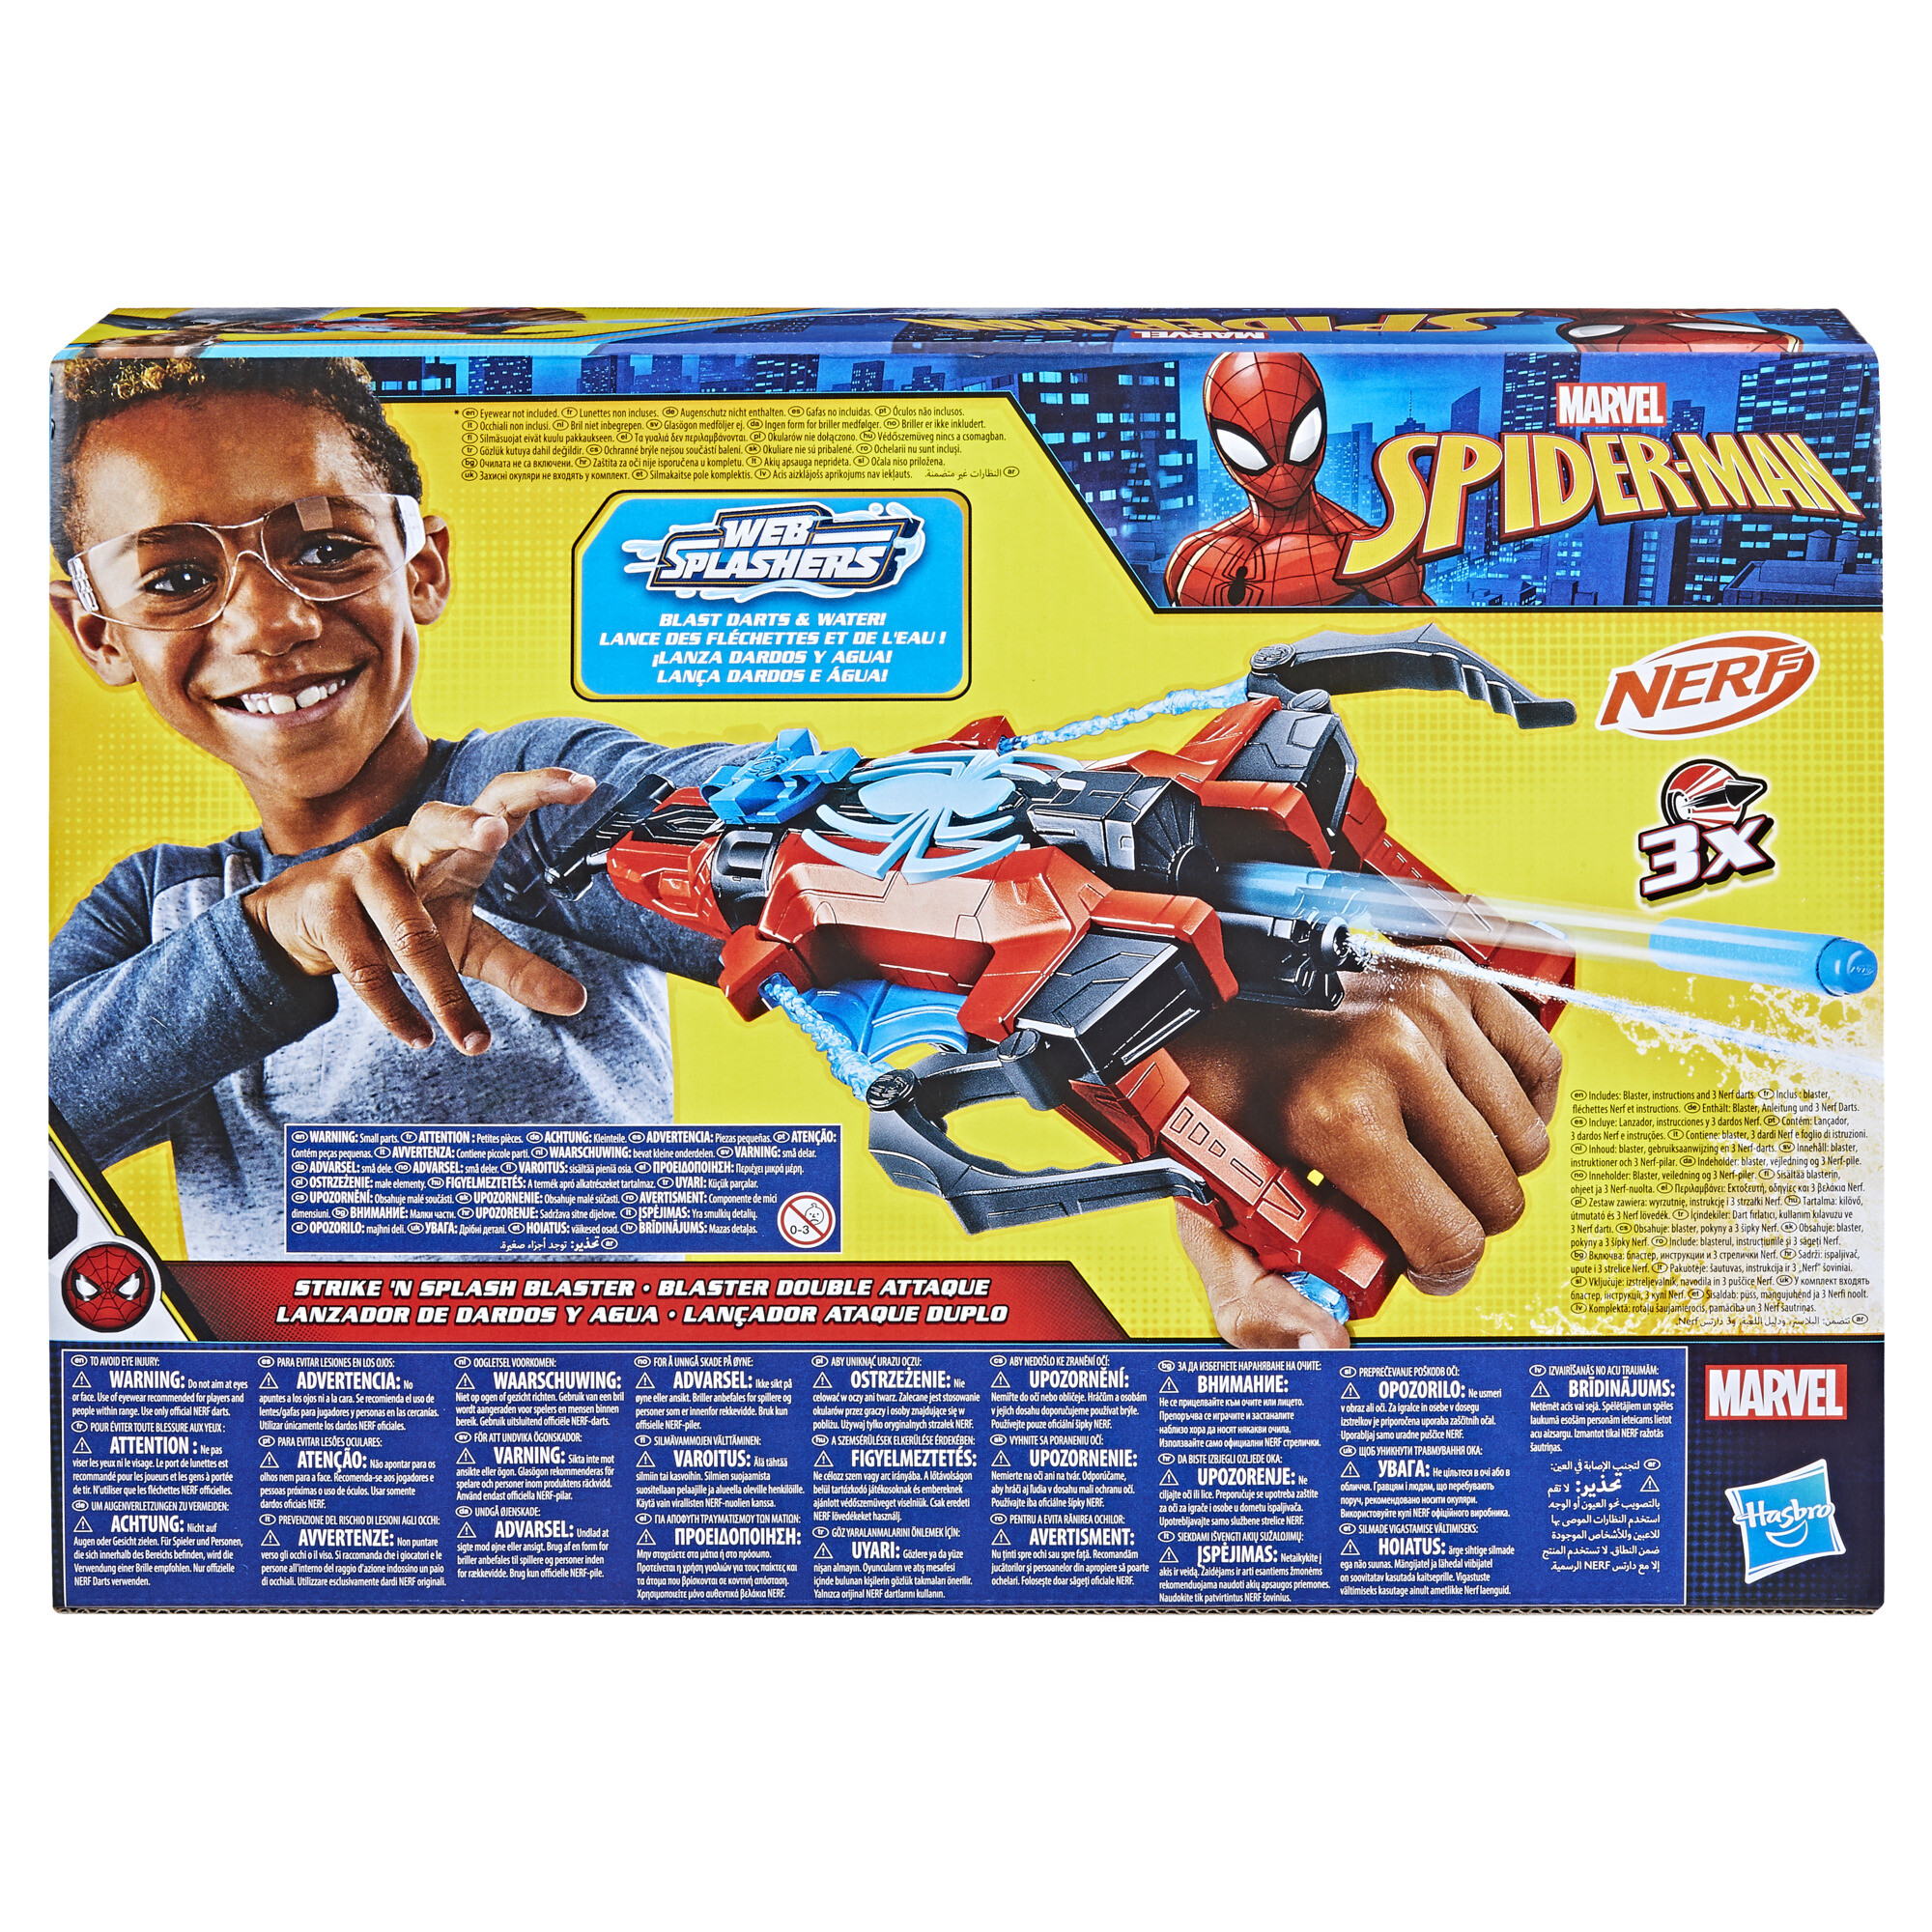 Hasbro marvel, spider-man, blaster strike 'n splash, giocattoli di supereroi, soaker nerf di spider-man - Spiderman